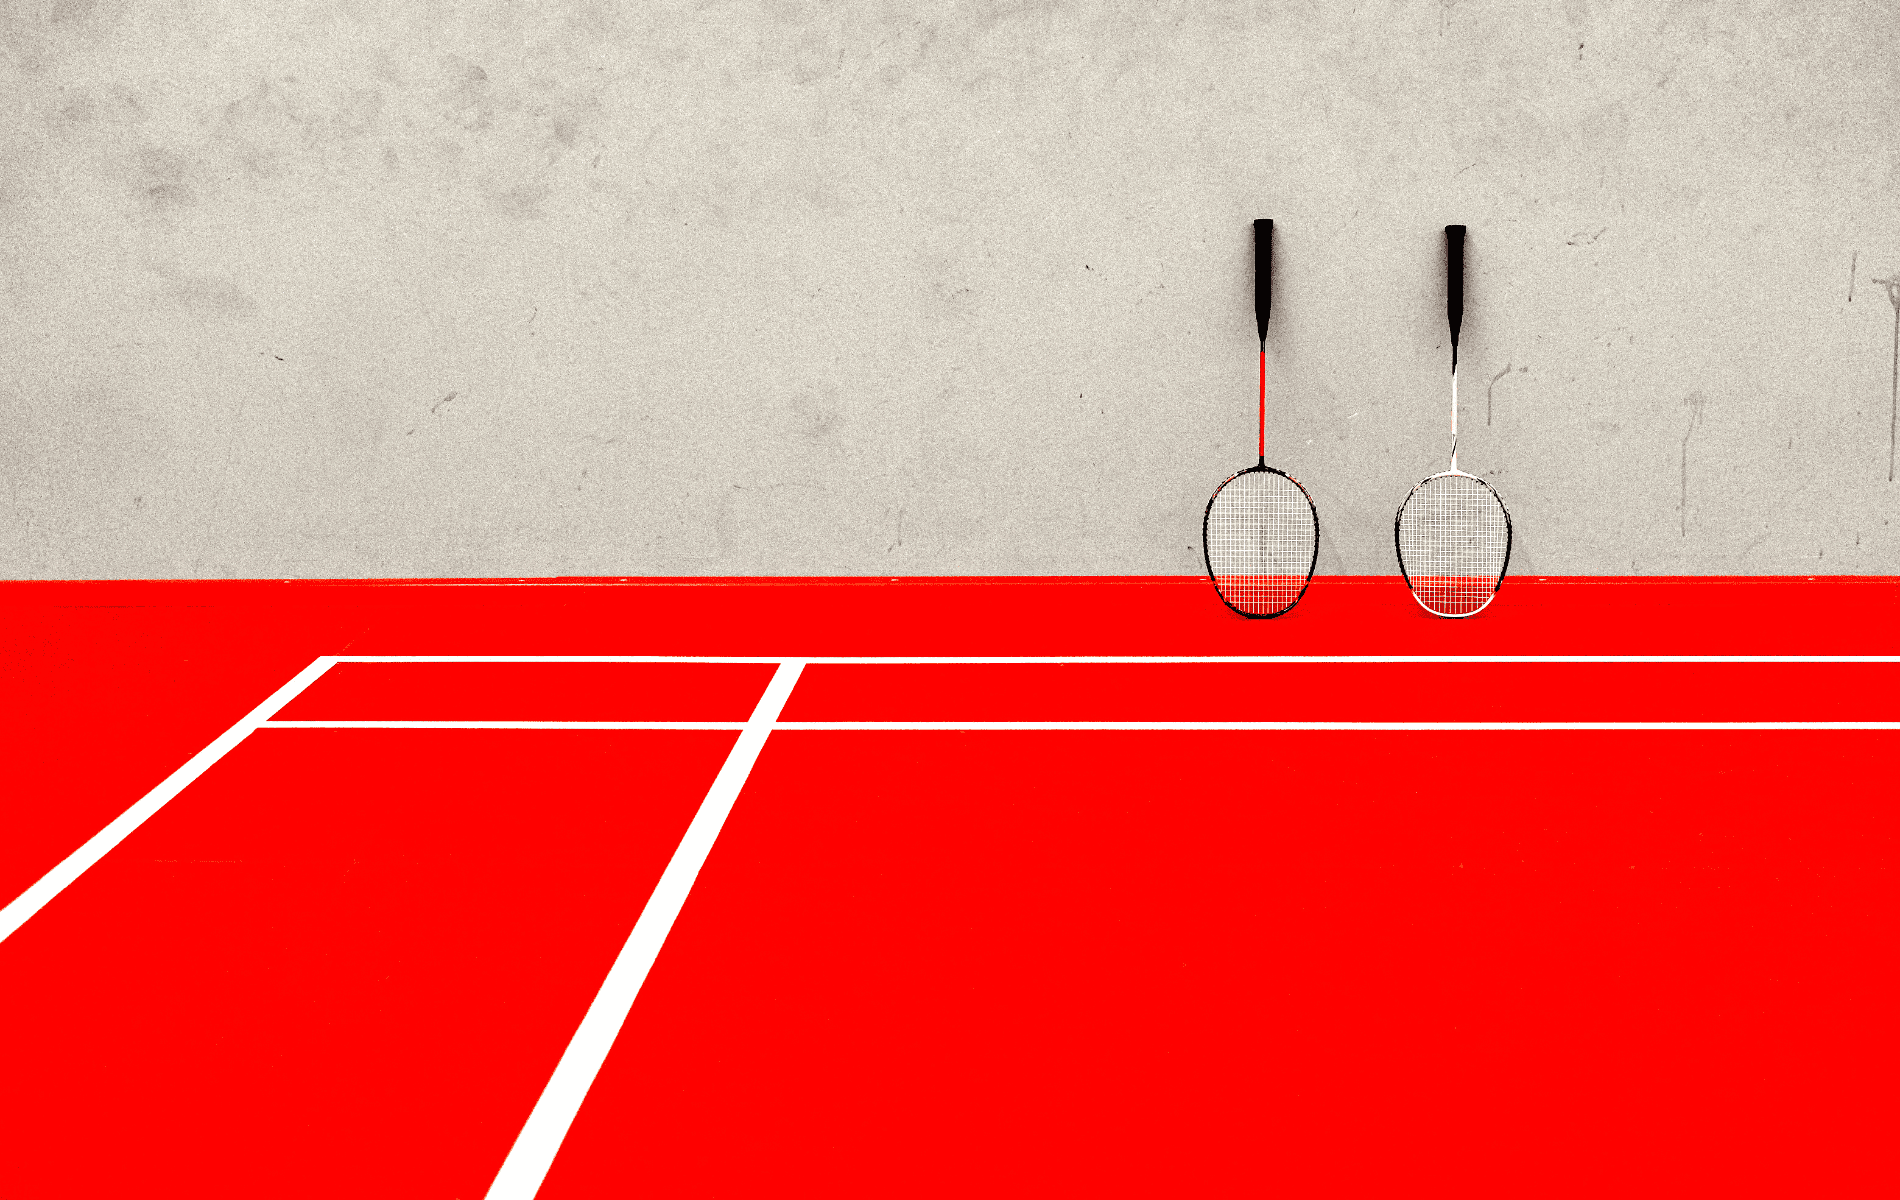 Terrain Badminton Red star